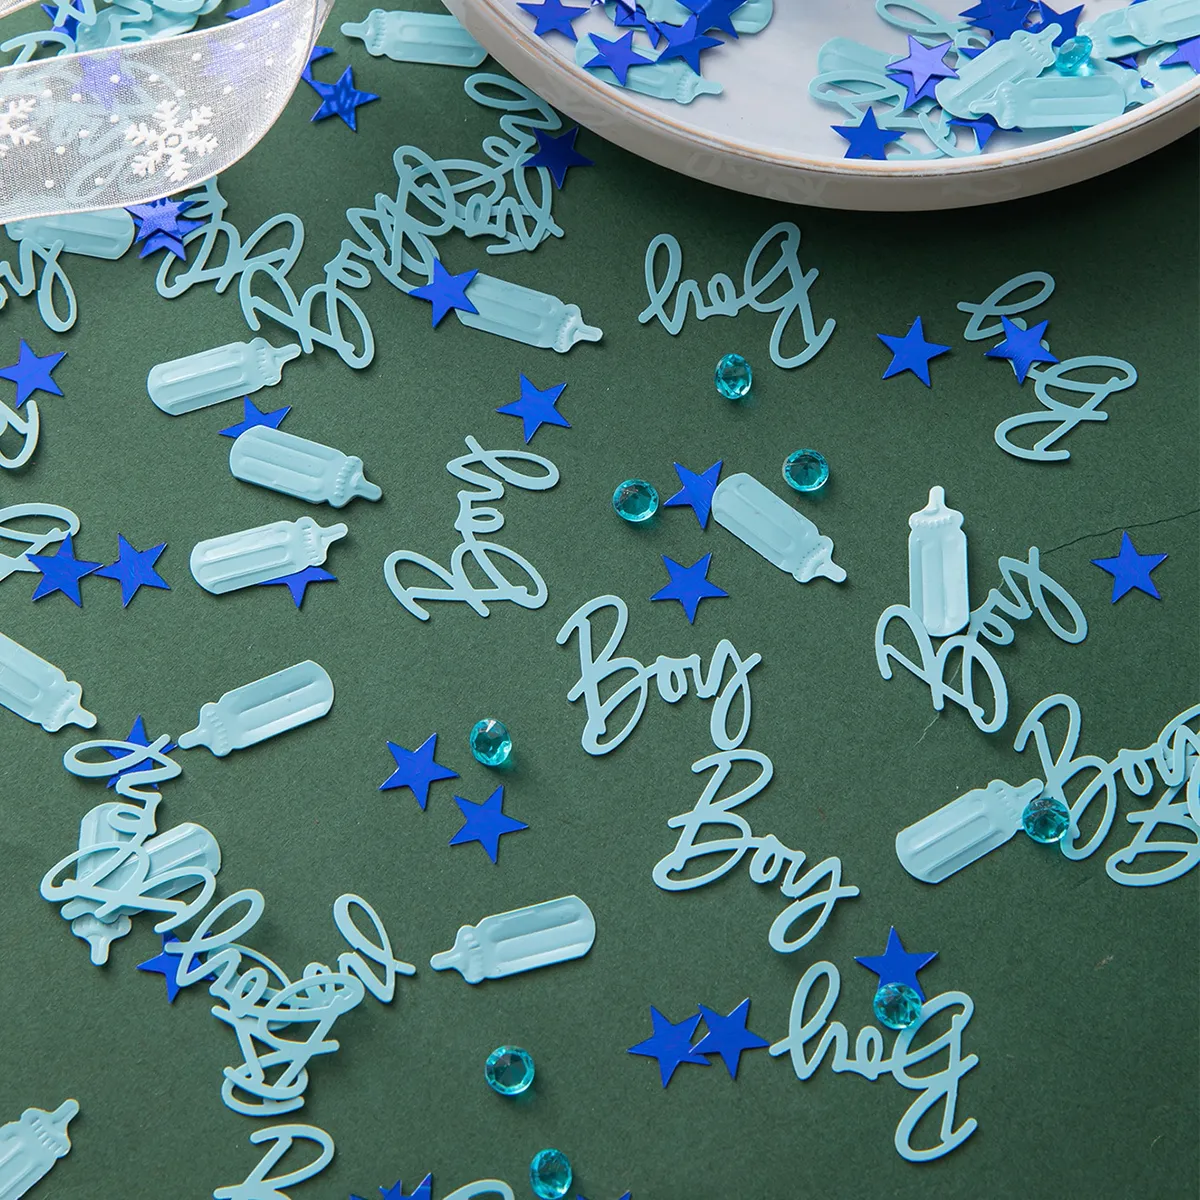 15g Confetti Baby Shower Decoration Letters, Feeding Bottle, Pentagram, Diamond Party Wedding Tablet